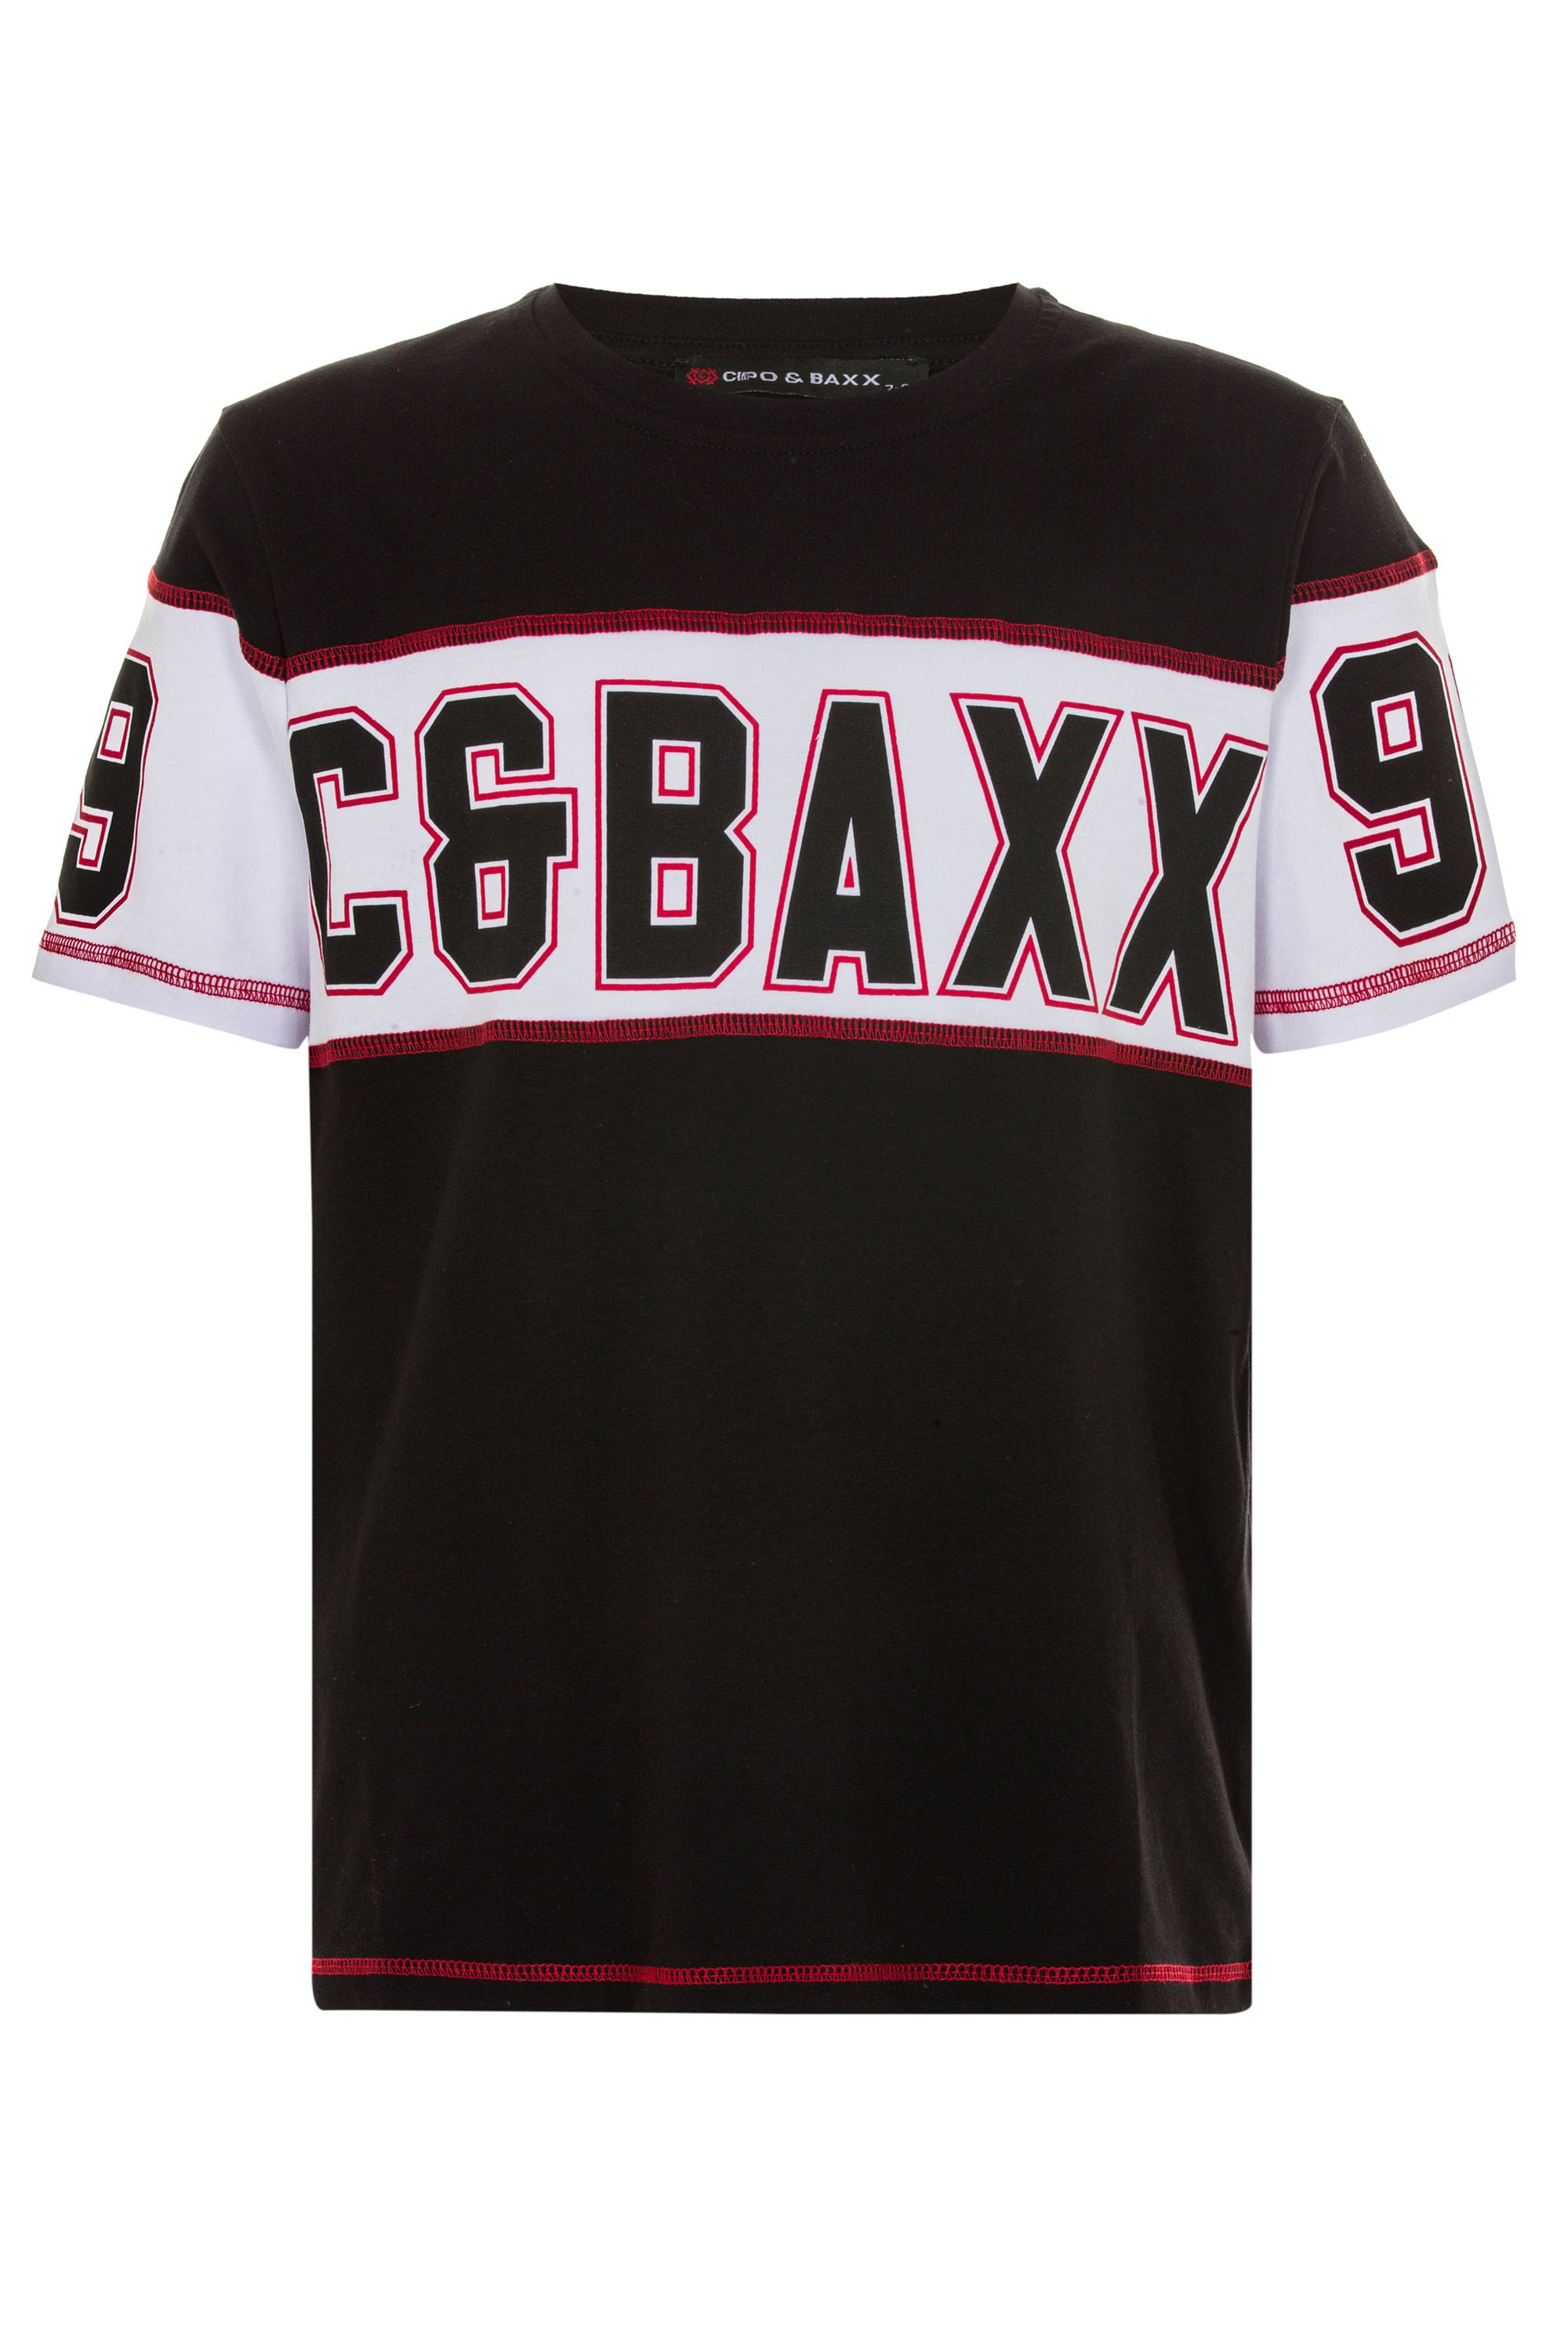 coolem mit Cipo Black & BAUR Friday T-Shirt, Baxx | Markenprint